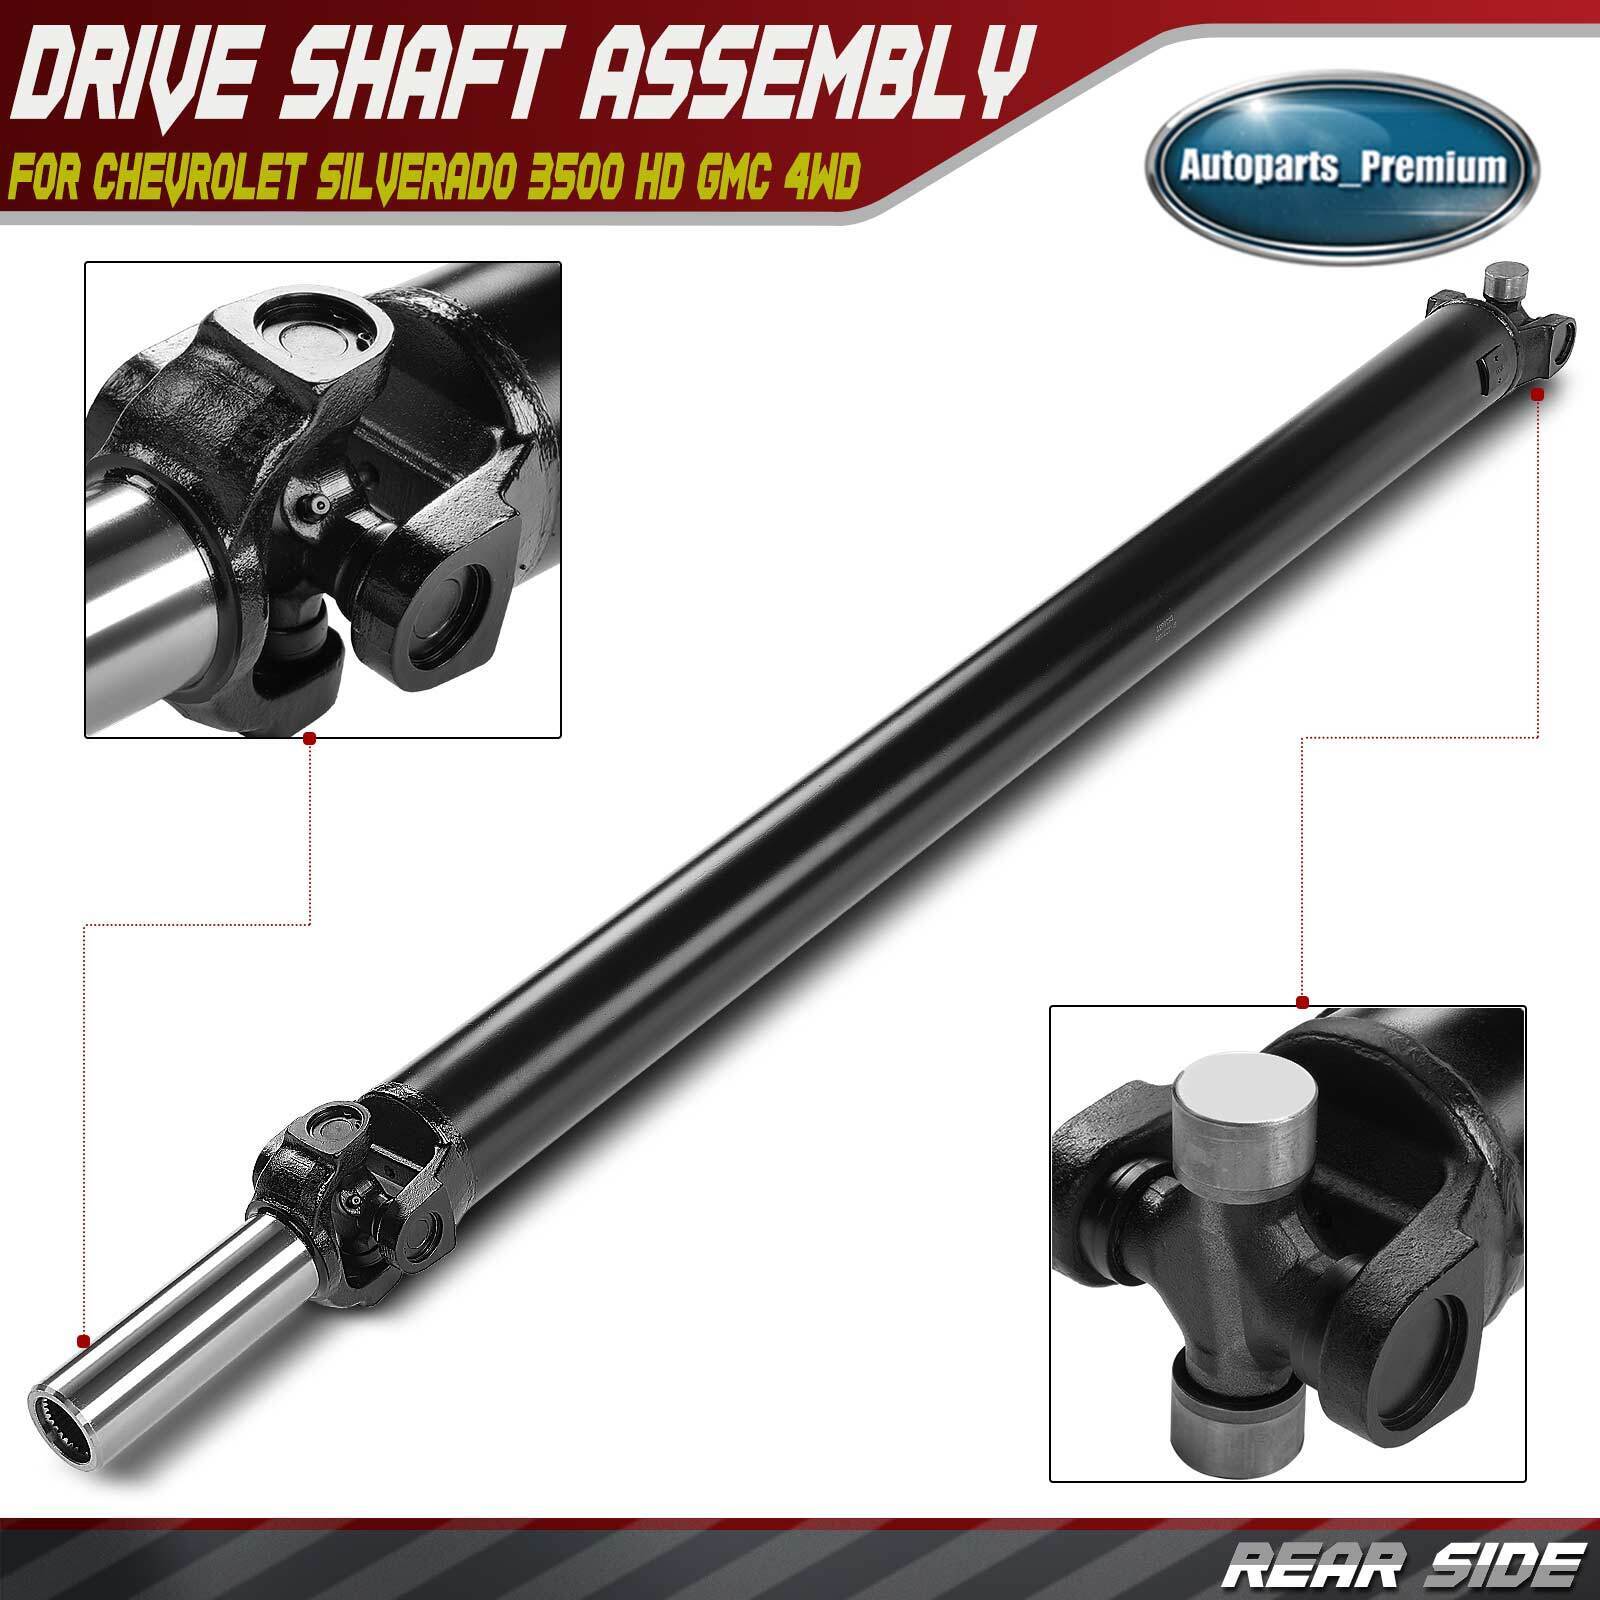 Rear Side Driveshaft Prop Shaft Assembly for Chevrolet Silverado 3500 HD GMC 4WD